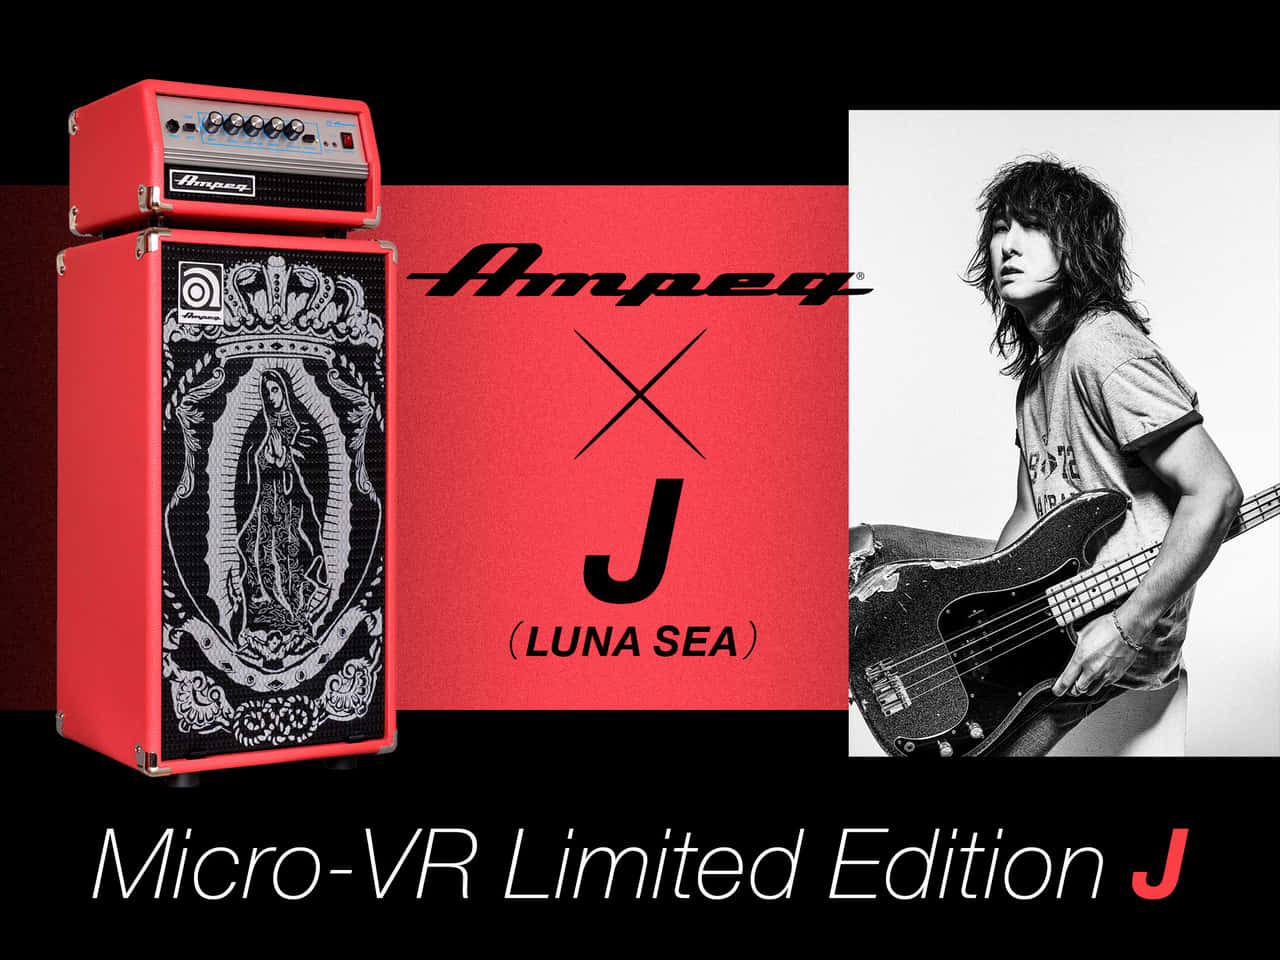 Ampeg】Micro-VR Limited Edition J | ベース・マガジン